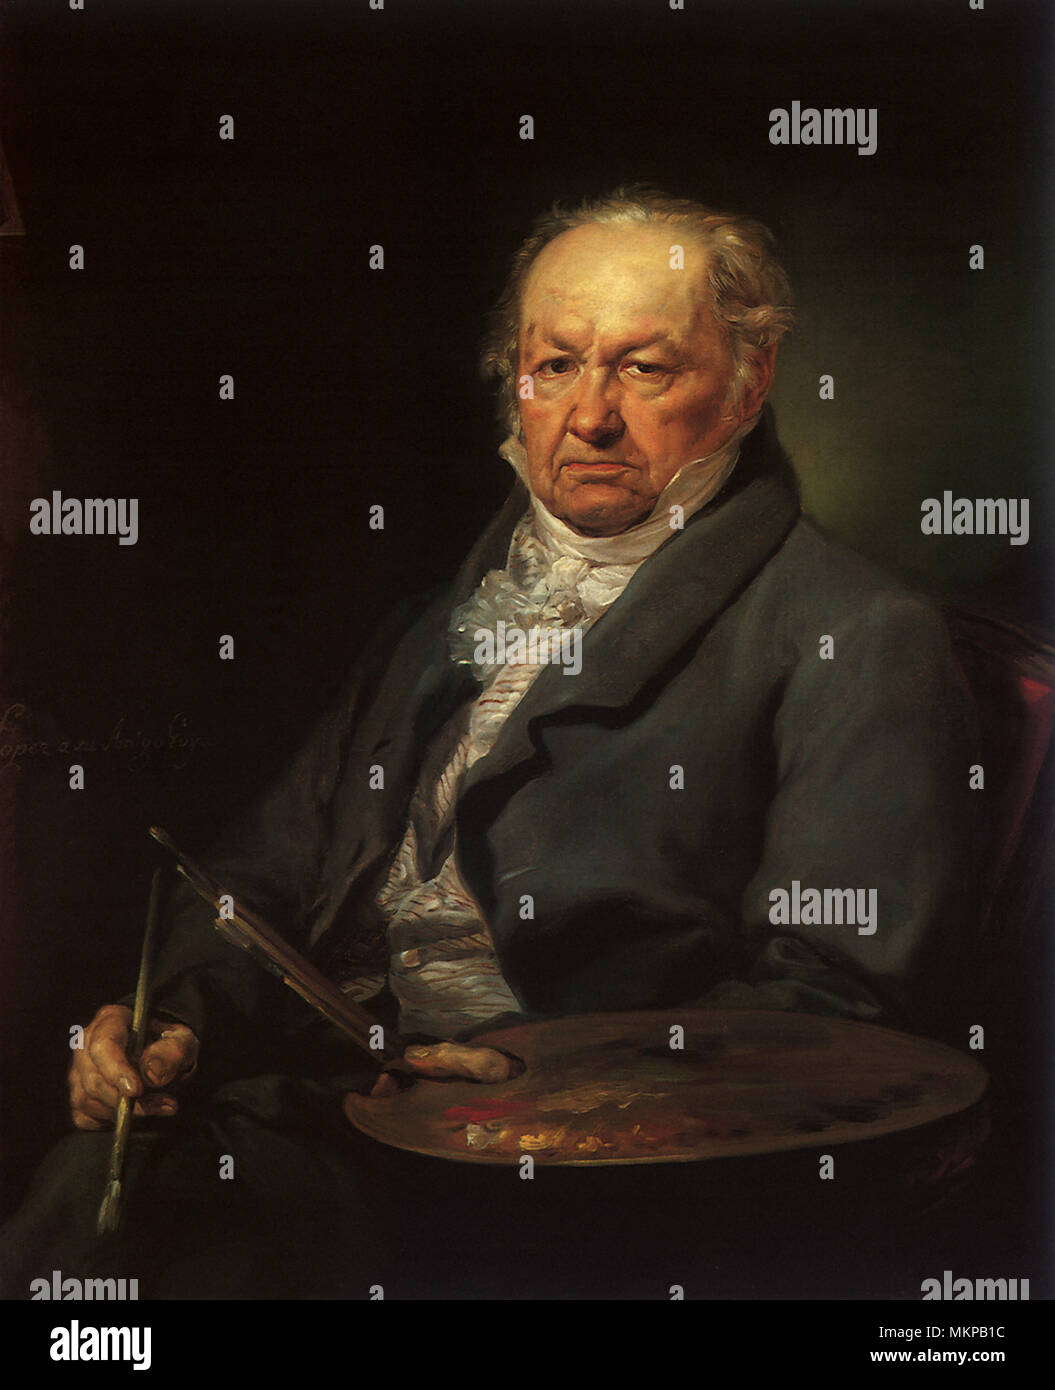 El pintor Francisco de Goya Foto de stock